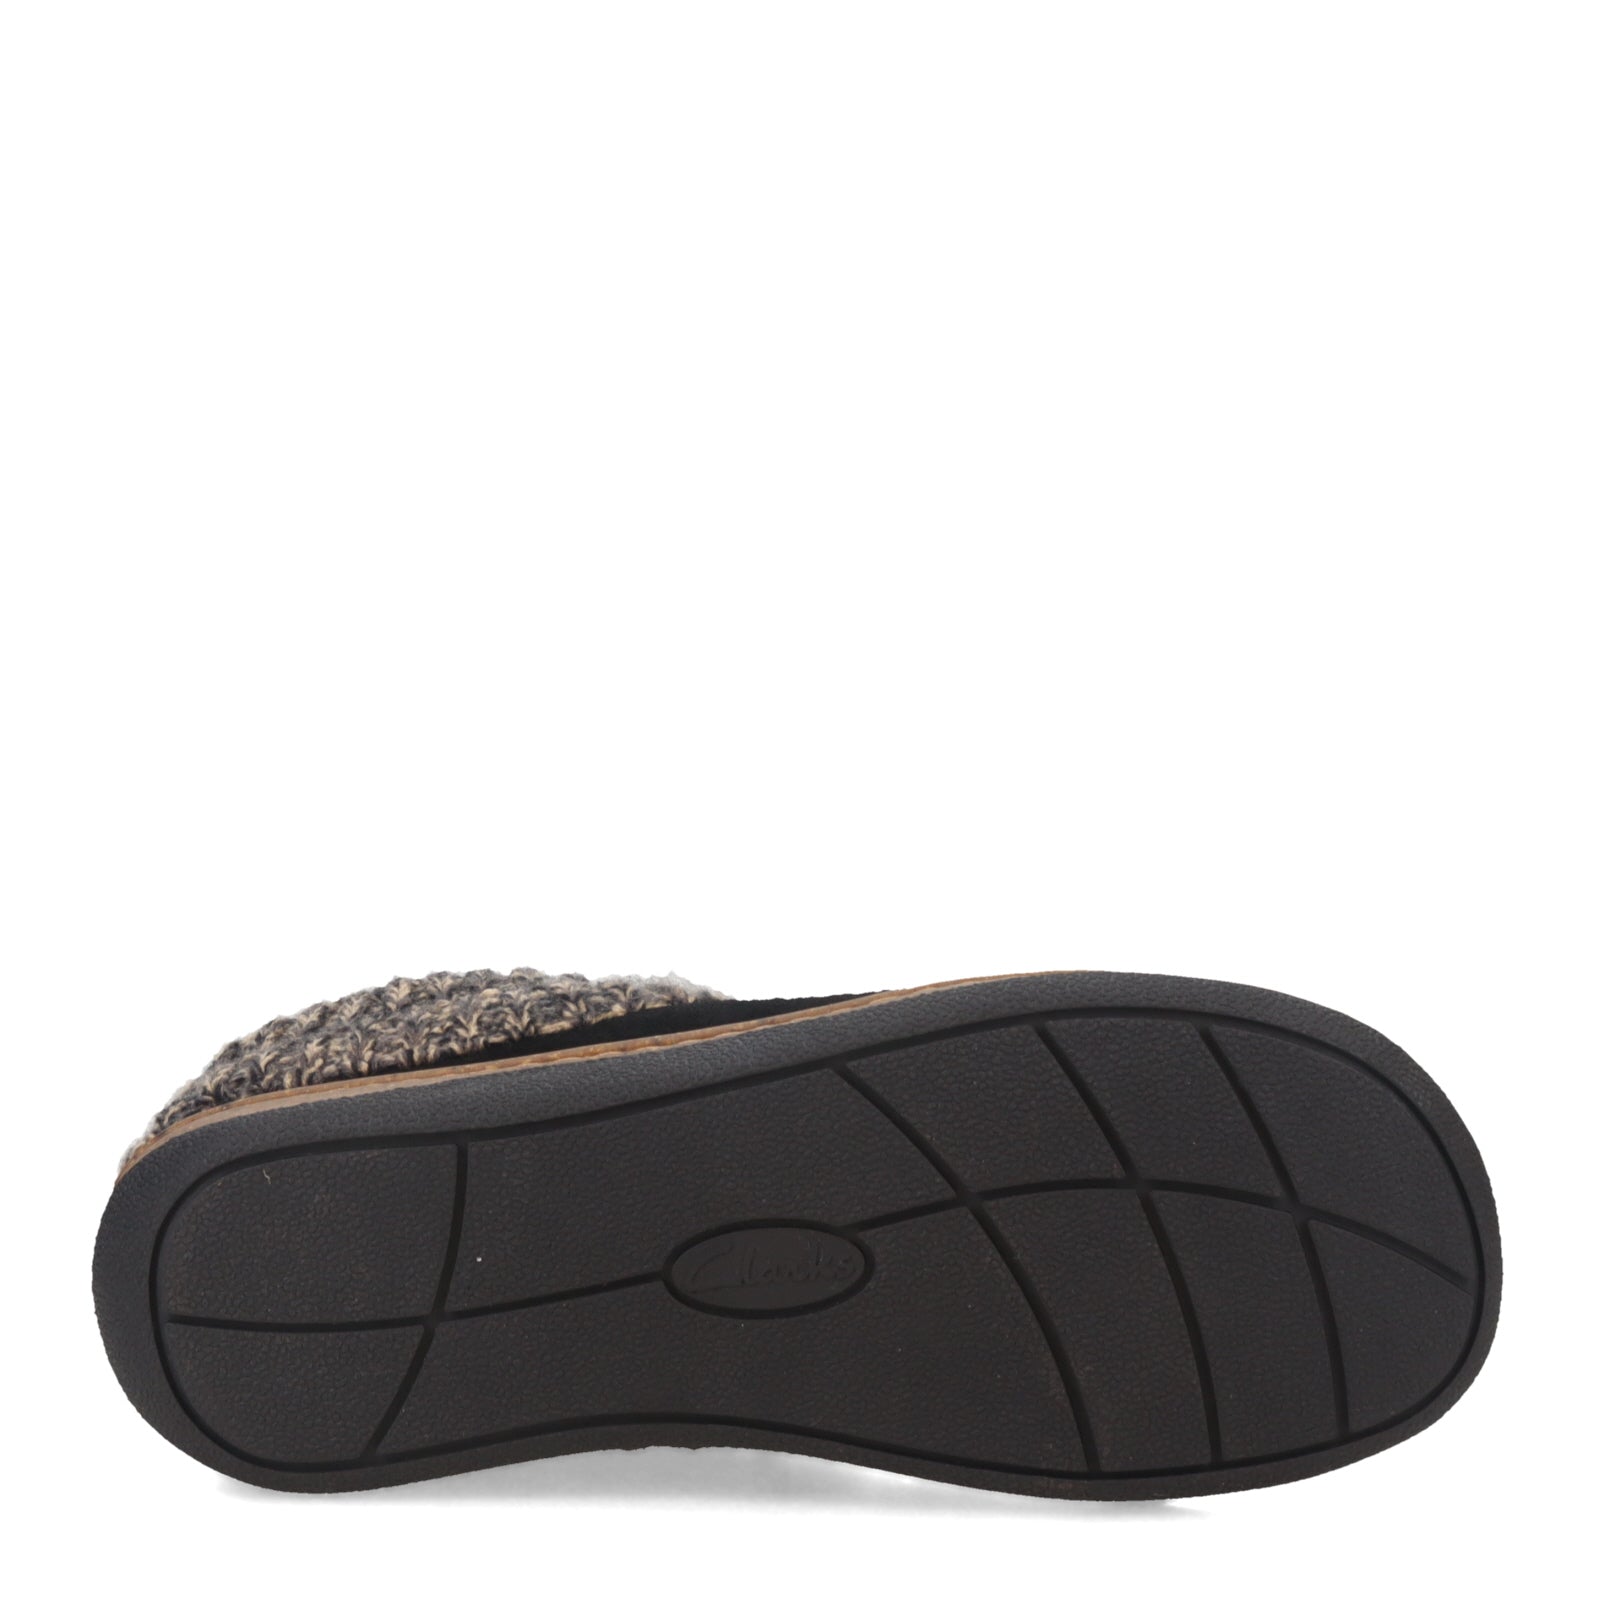 Clarks Moccasin Slippers for Women for sale | eBay